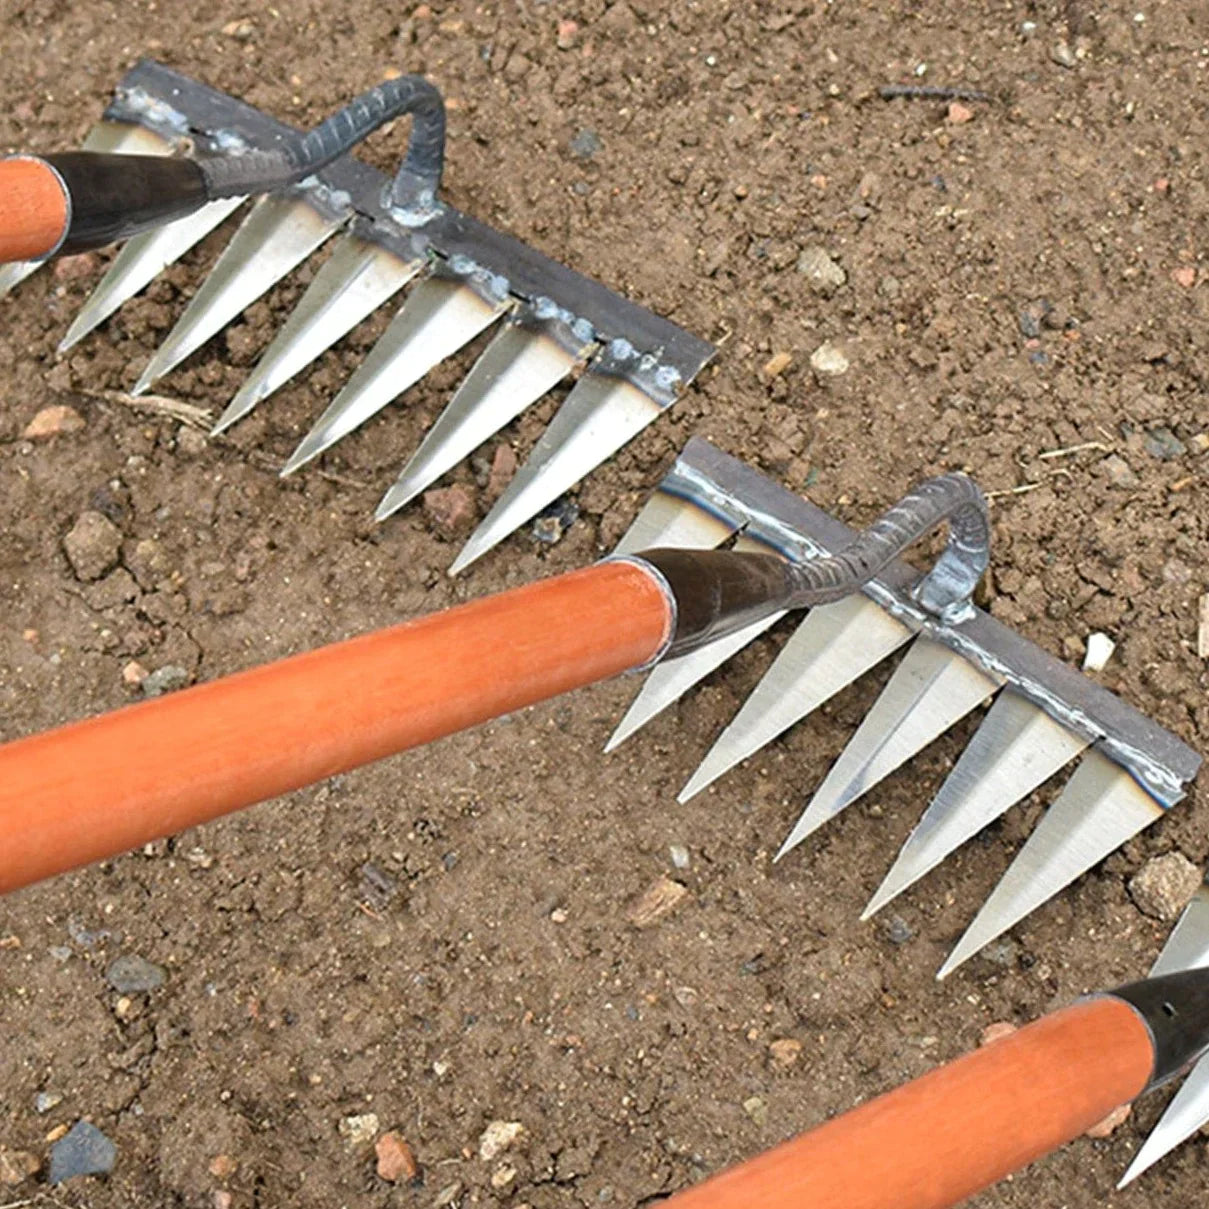 Metal Hand Rakes For Gardening, Weeding - Heavy Duty Metal Tine Rake, Dethatching,